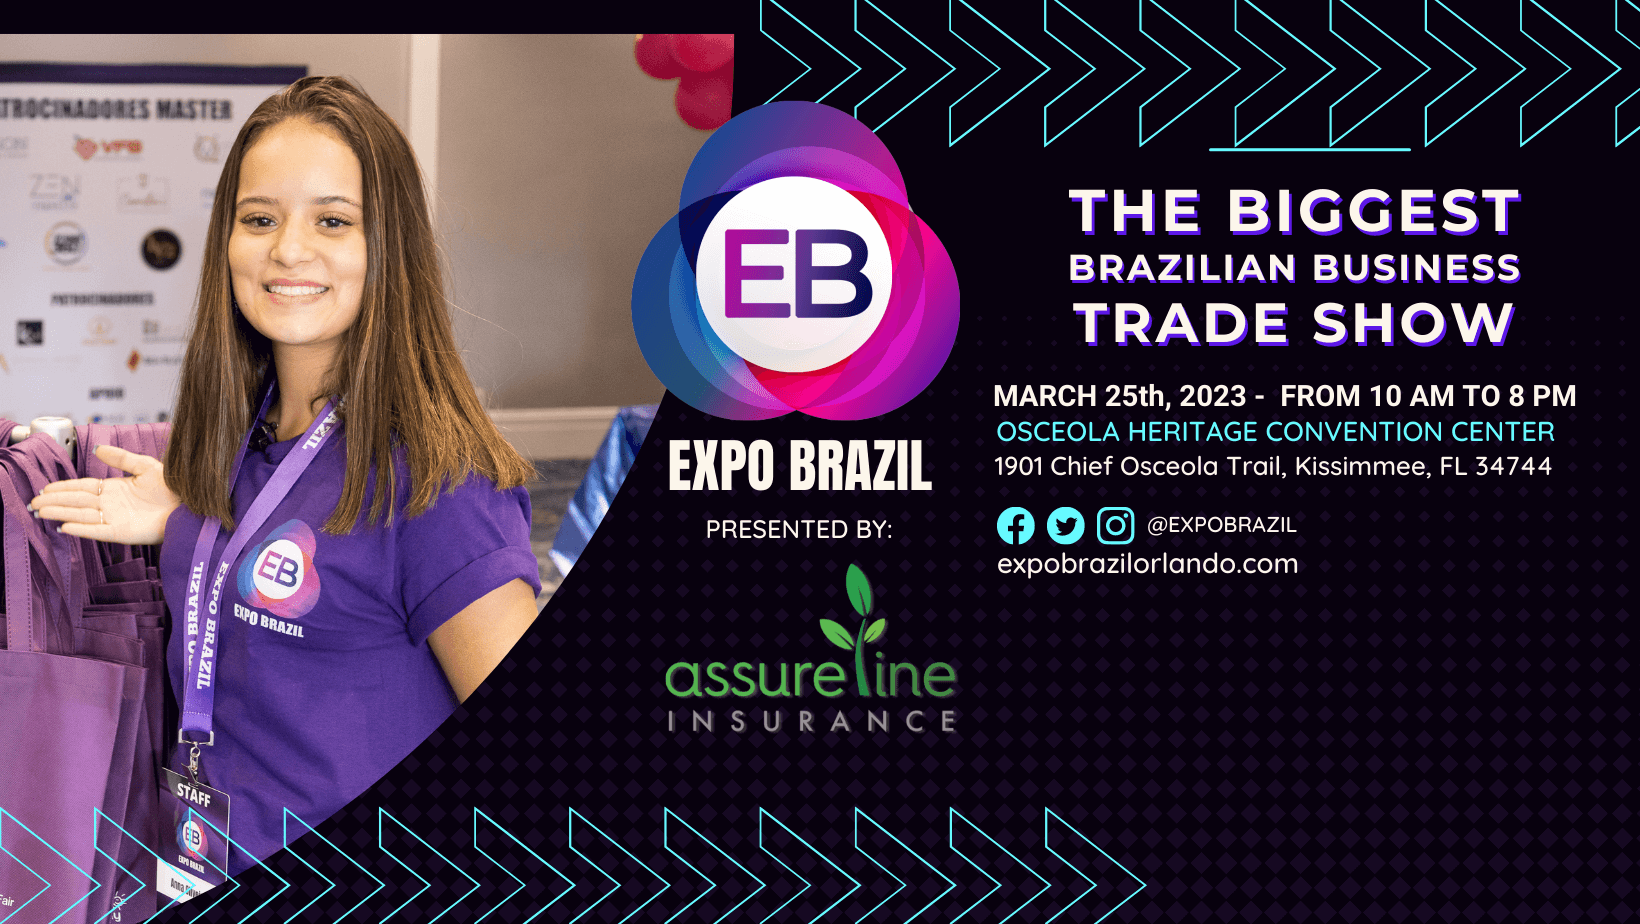 Expo Brazil EXPO BRAZIL 2023